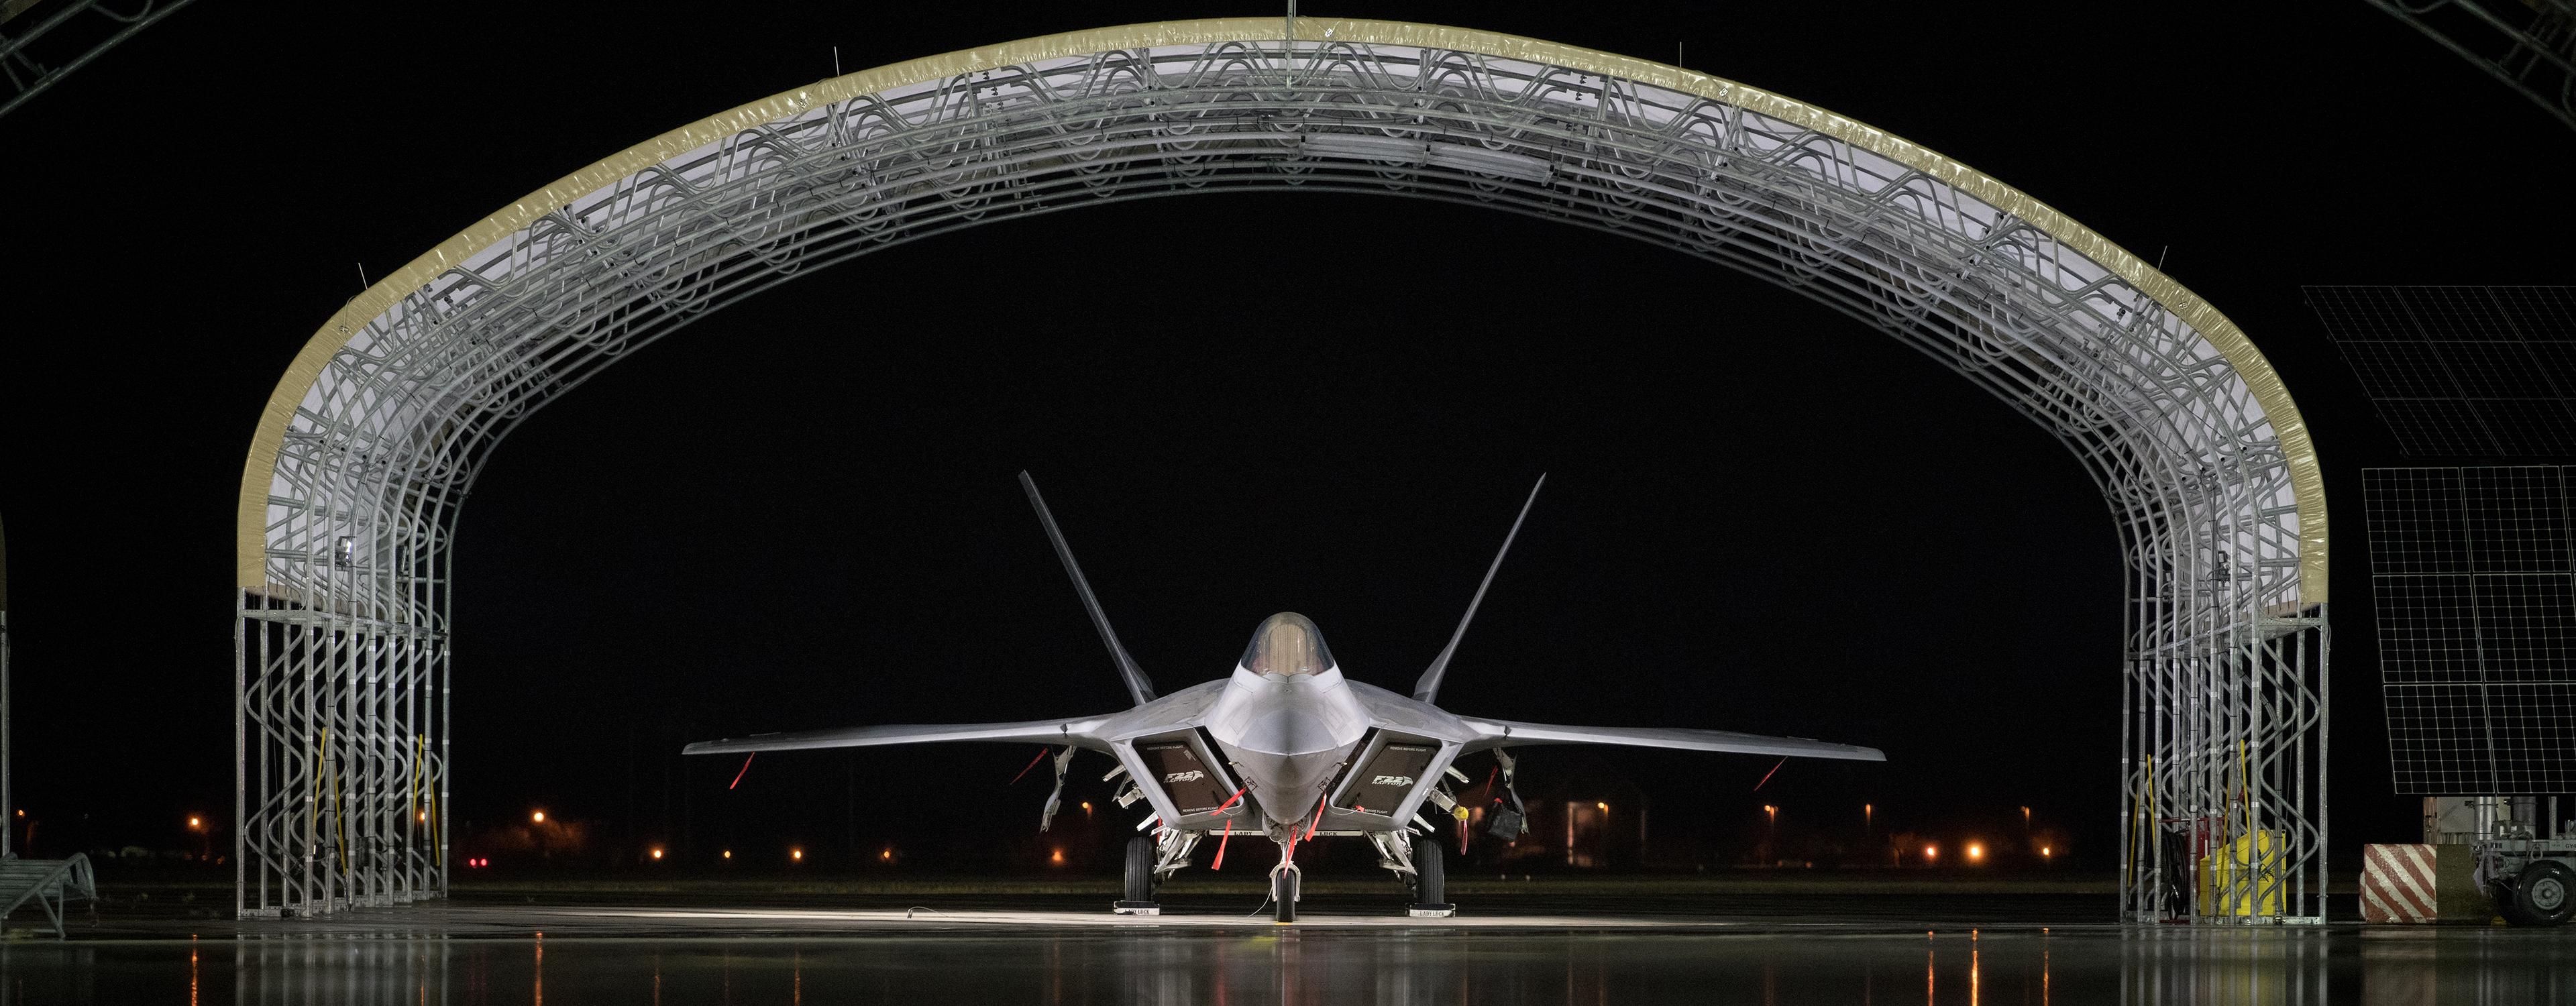 F-22 Raptor lit at Night under Sun Shade